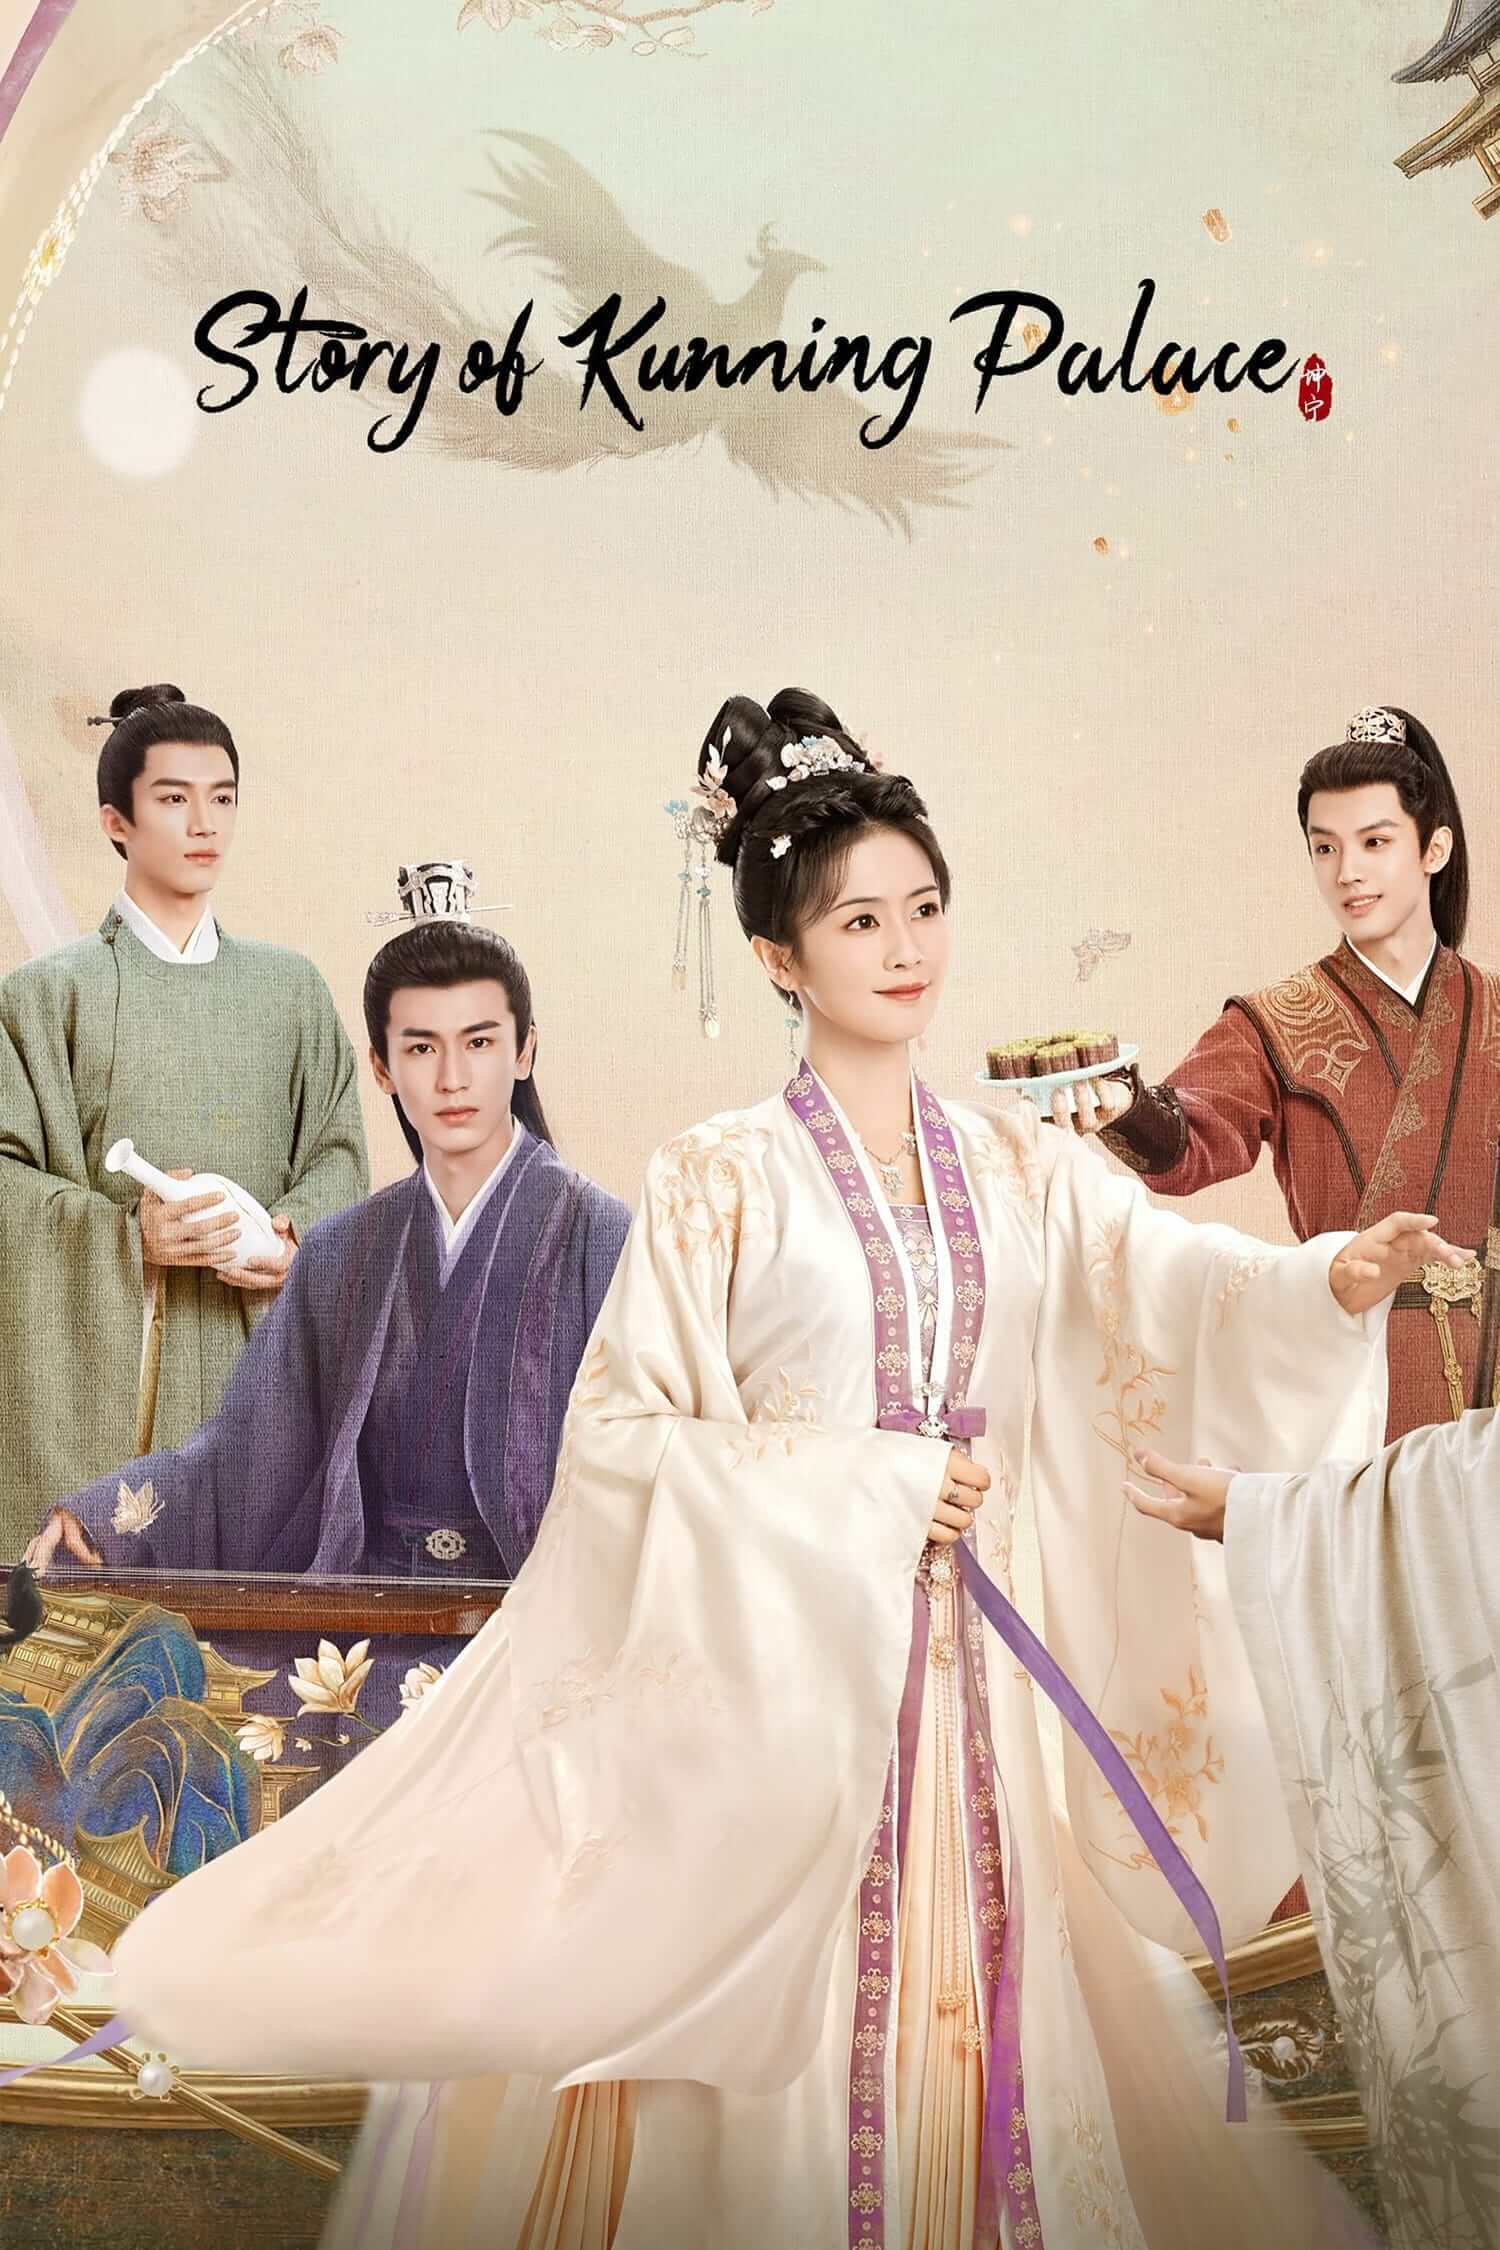 داستان کاخ کانینگ (Story of Kunning Palace)